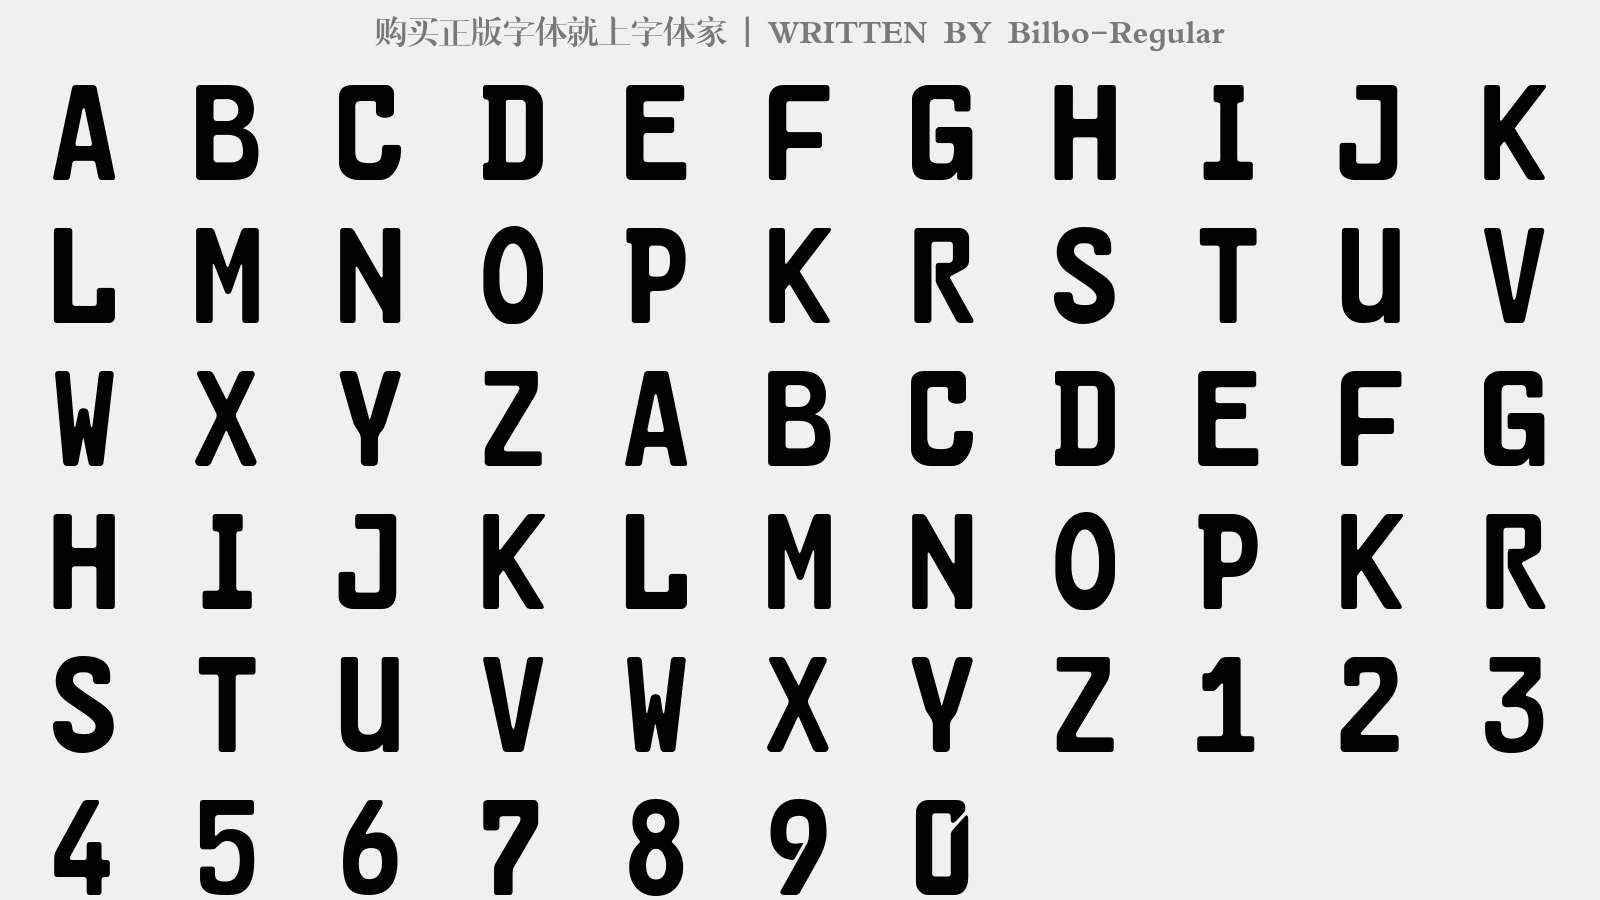 Bilbo-Regular - 大写字母/小写字母/数字